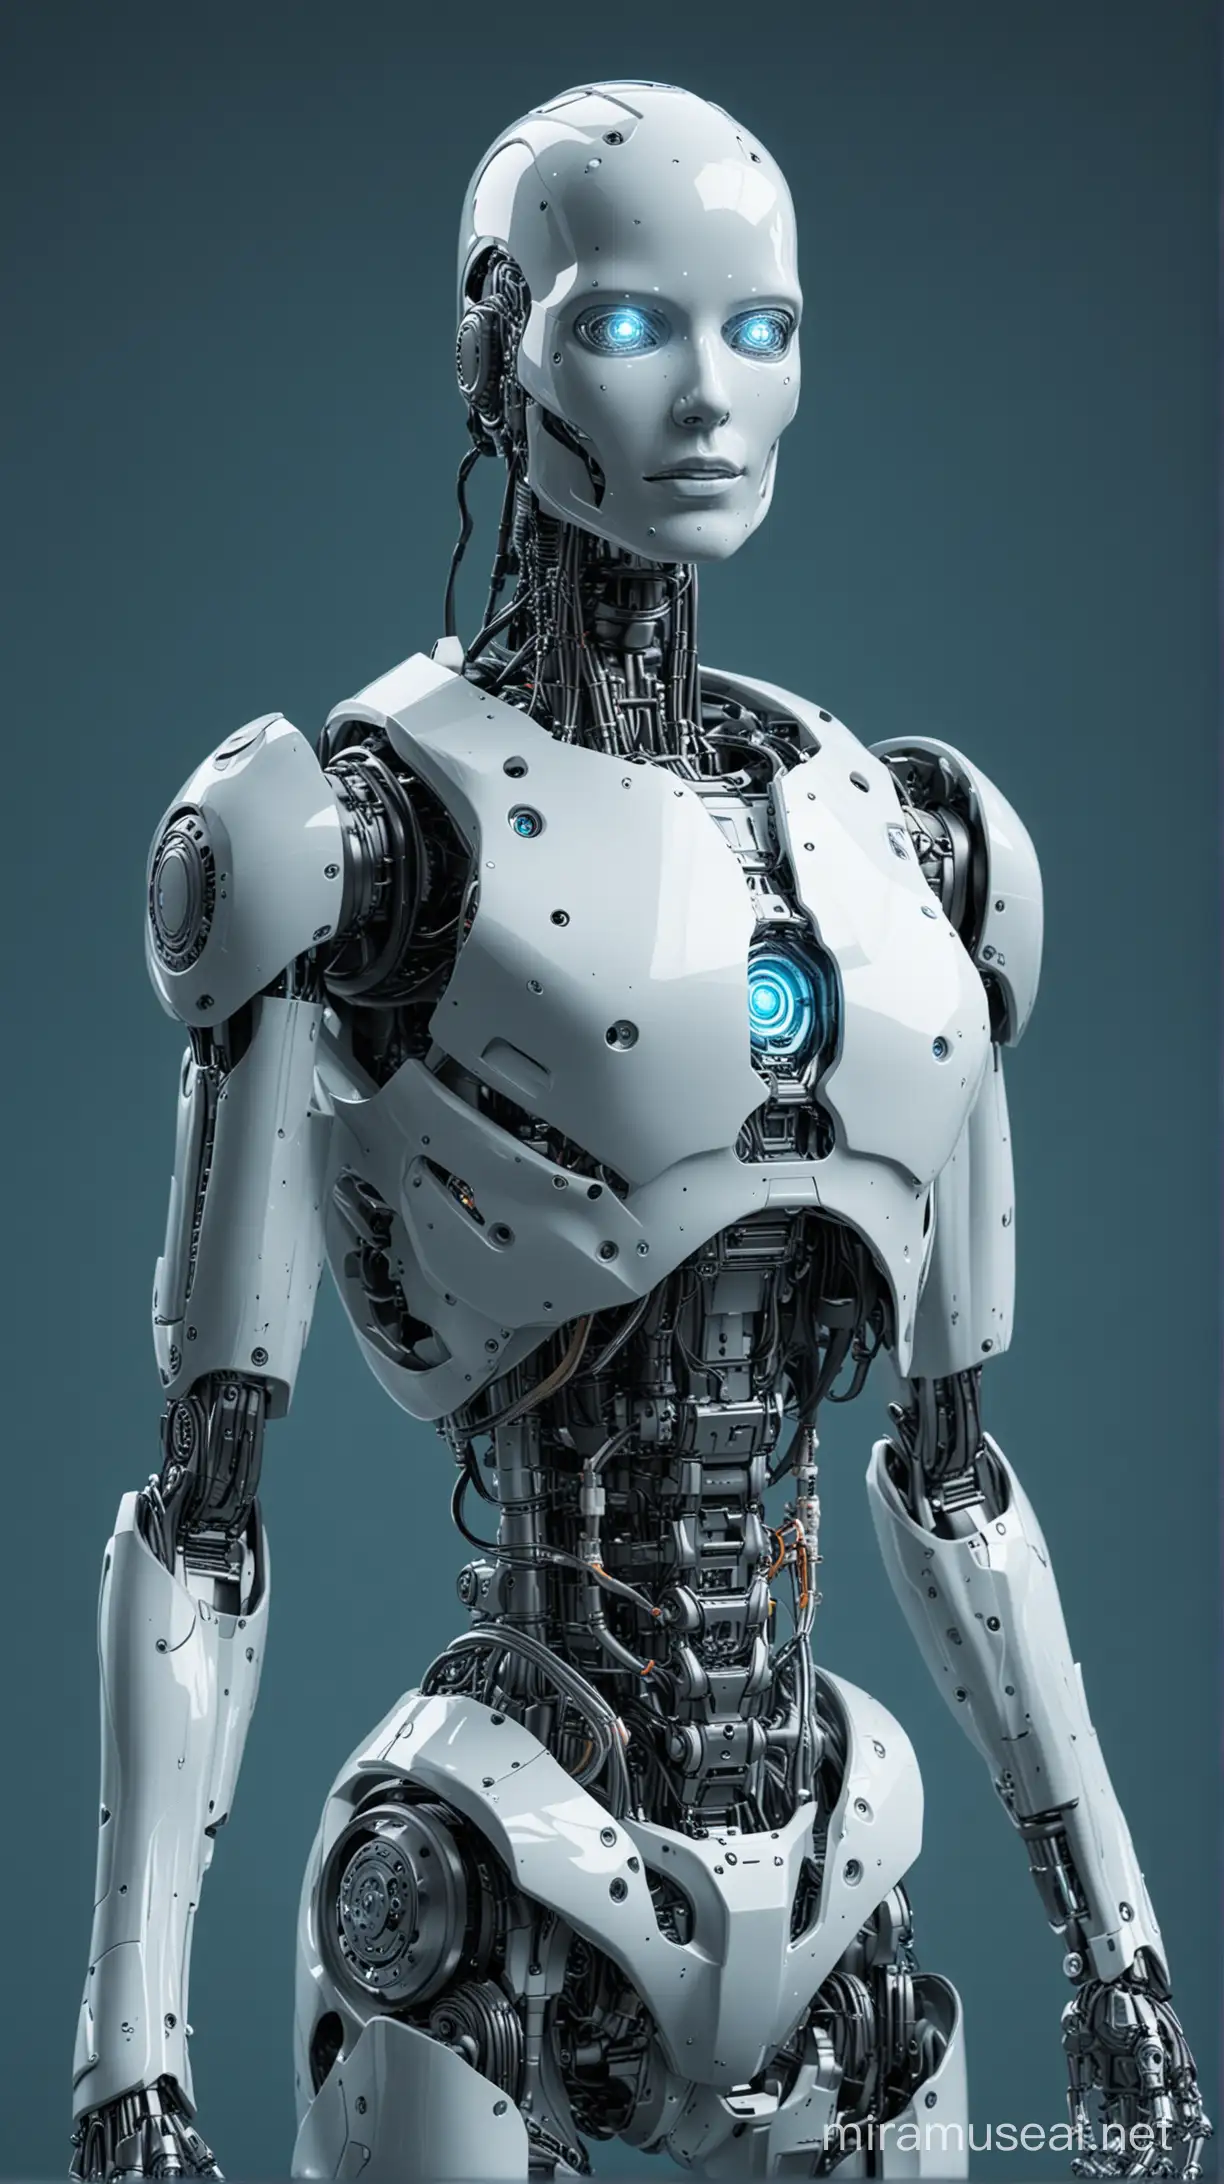 Artificial Intelligence image; no blue background; no robots